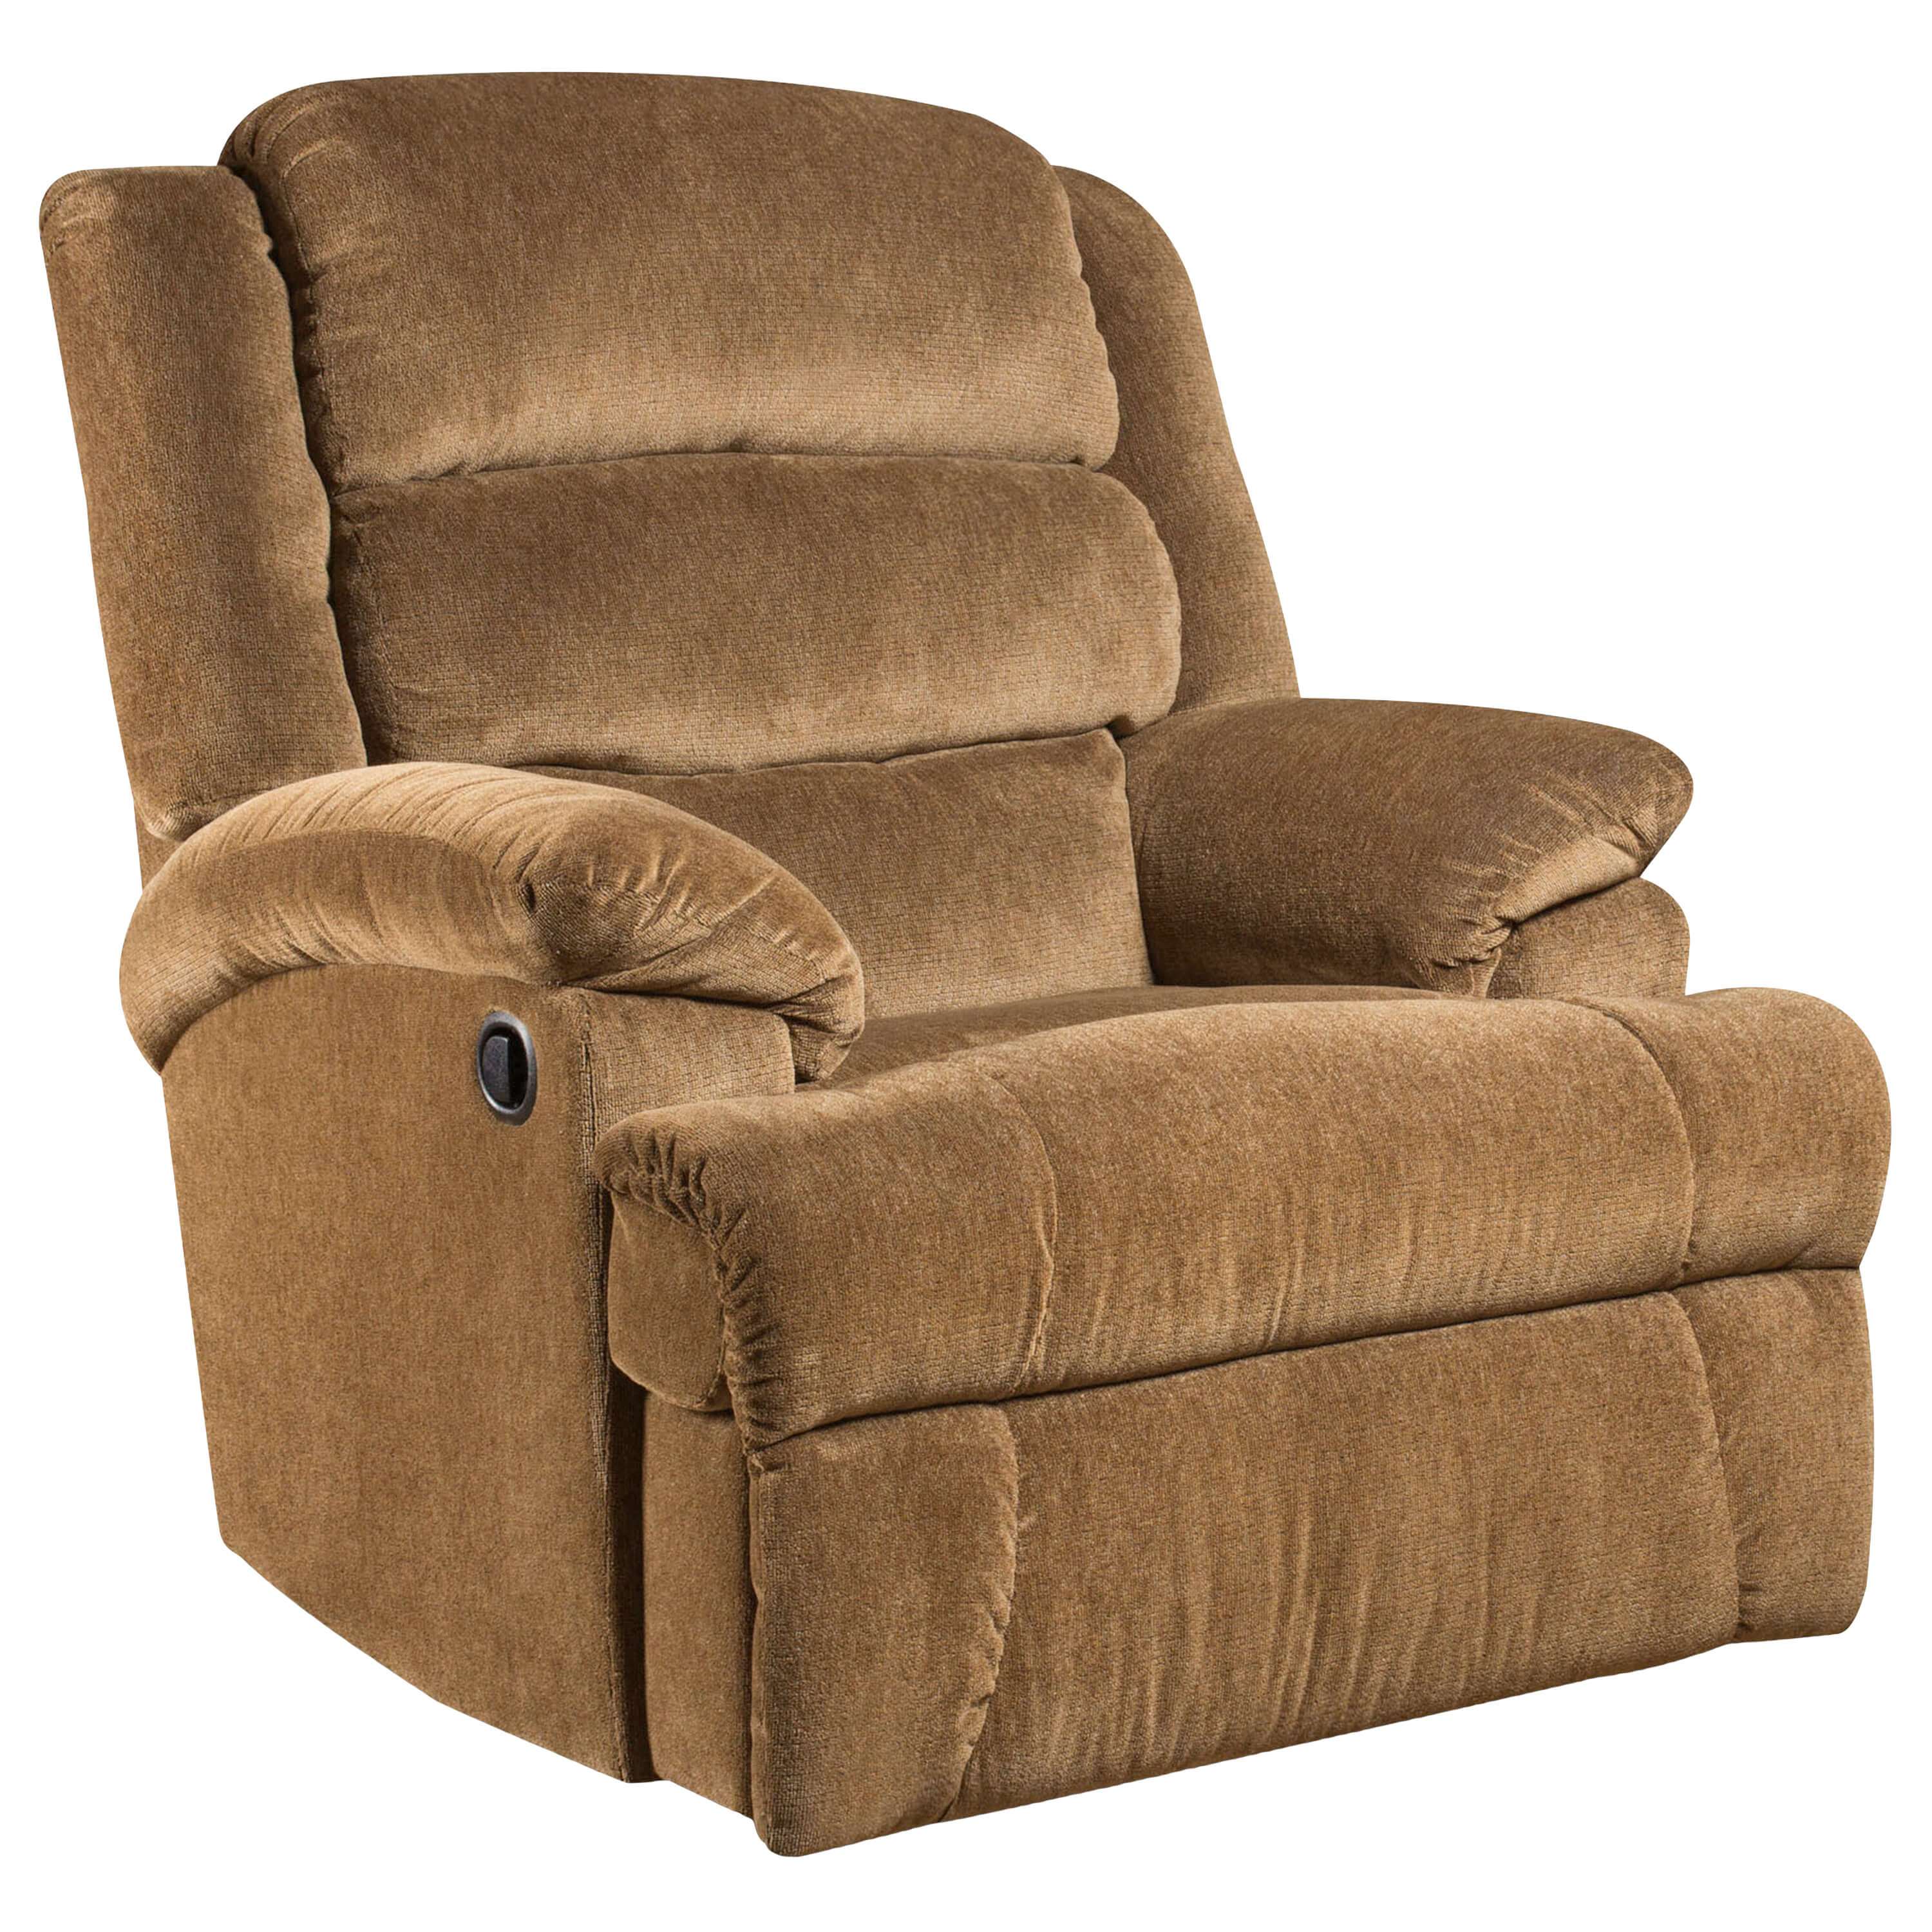 Modern recliner chair CUB AM 9960 7920 GG FLA